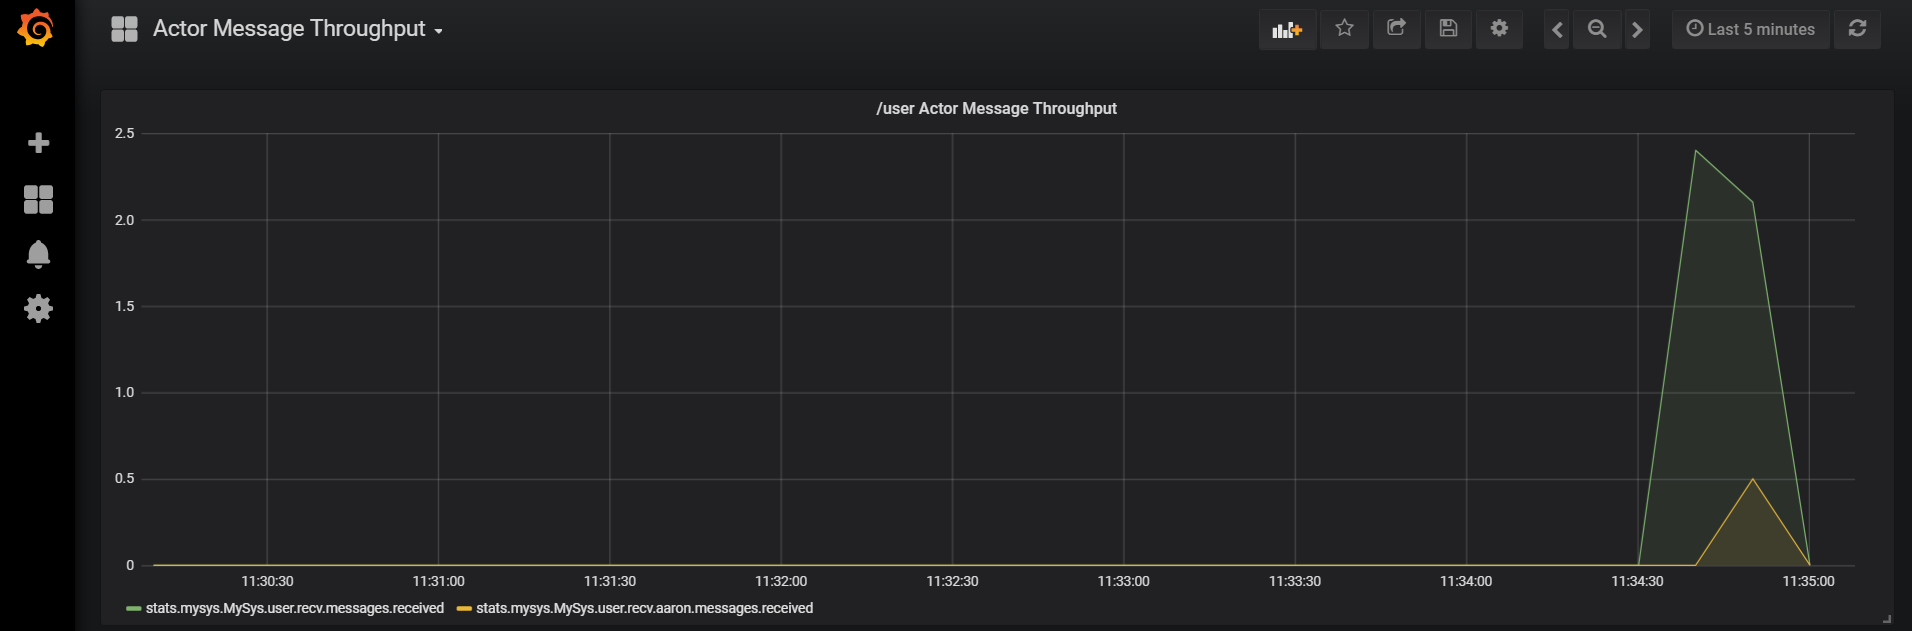 Akka.NET actor throughput monitoring with Phobos, captured by StatsD